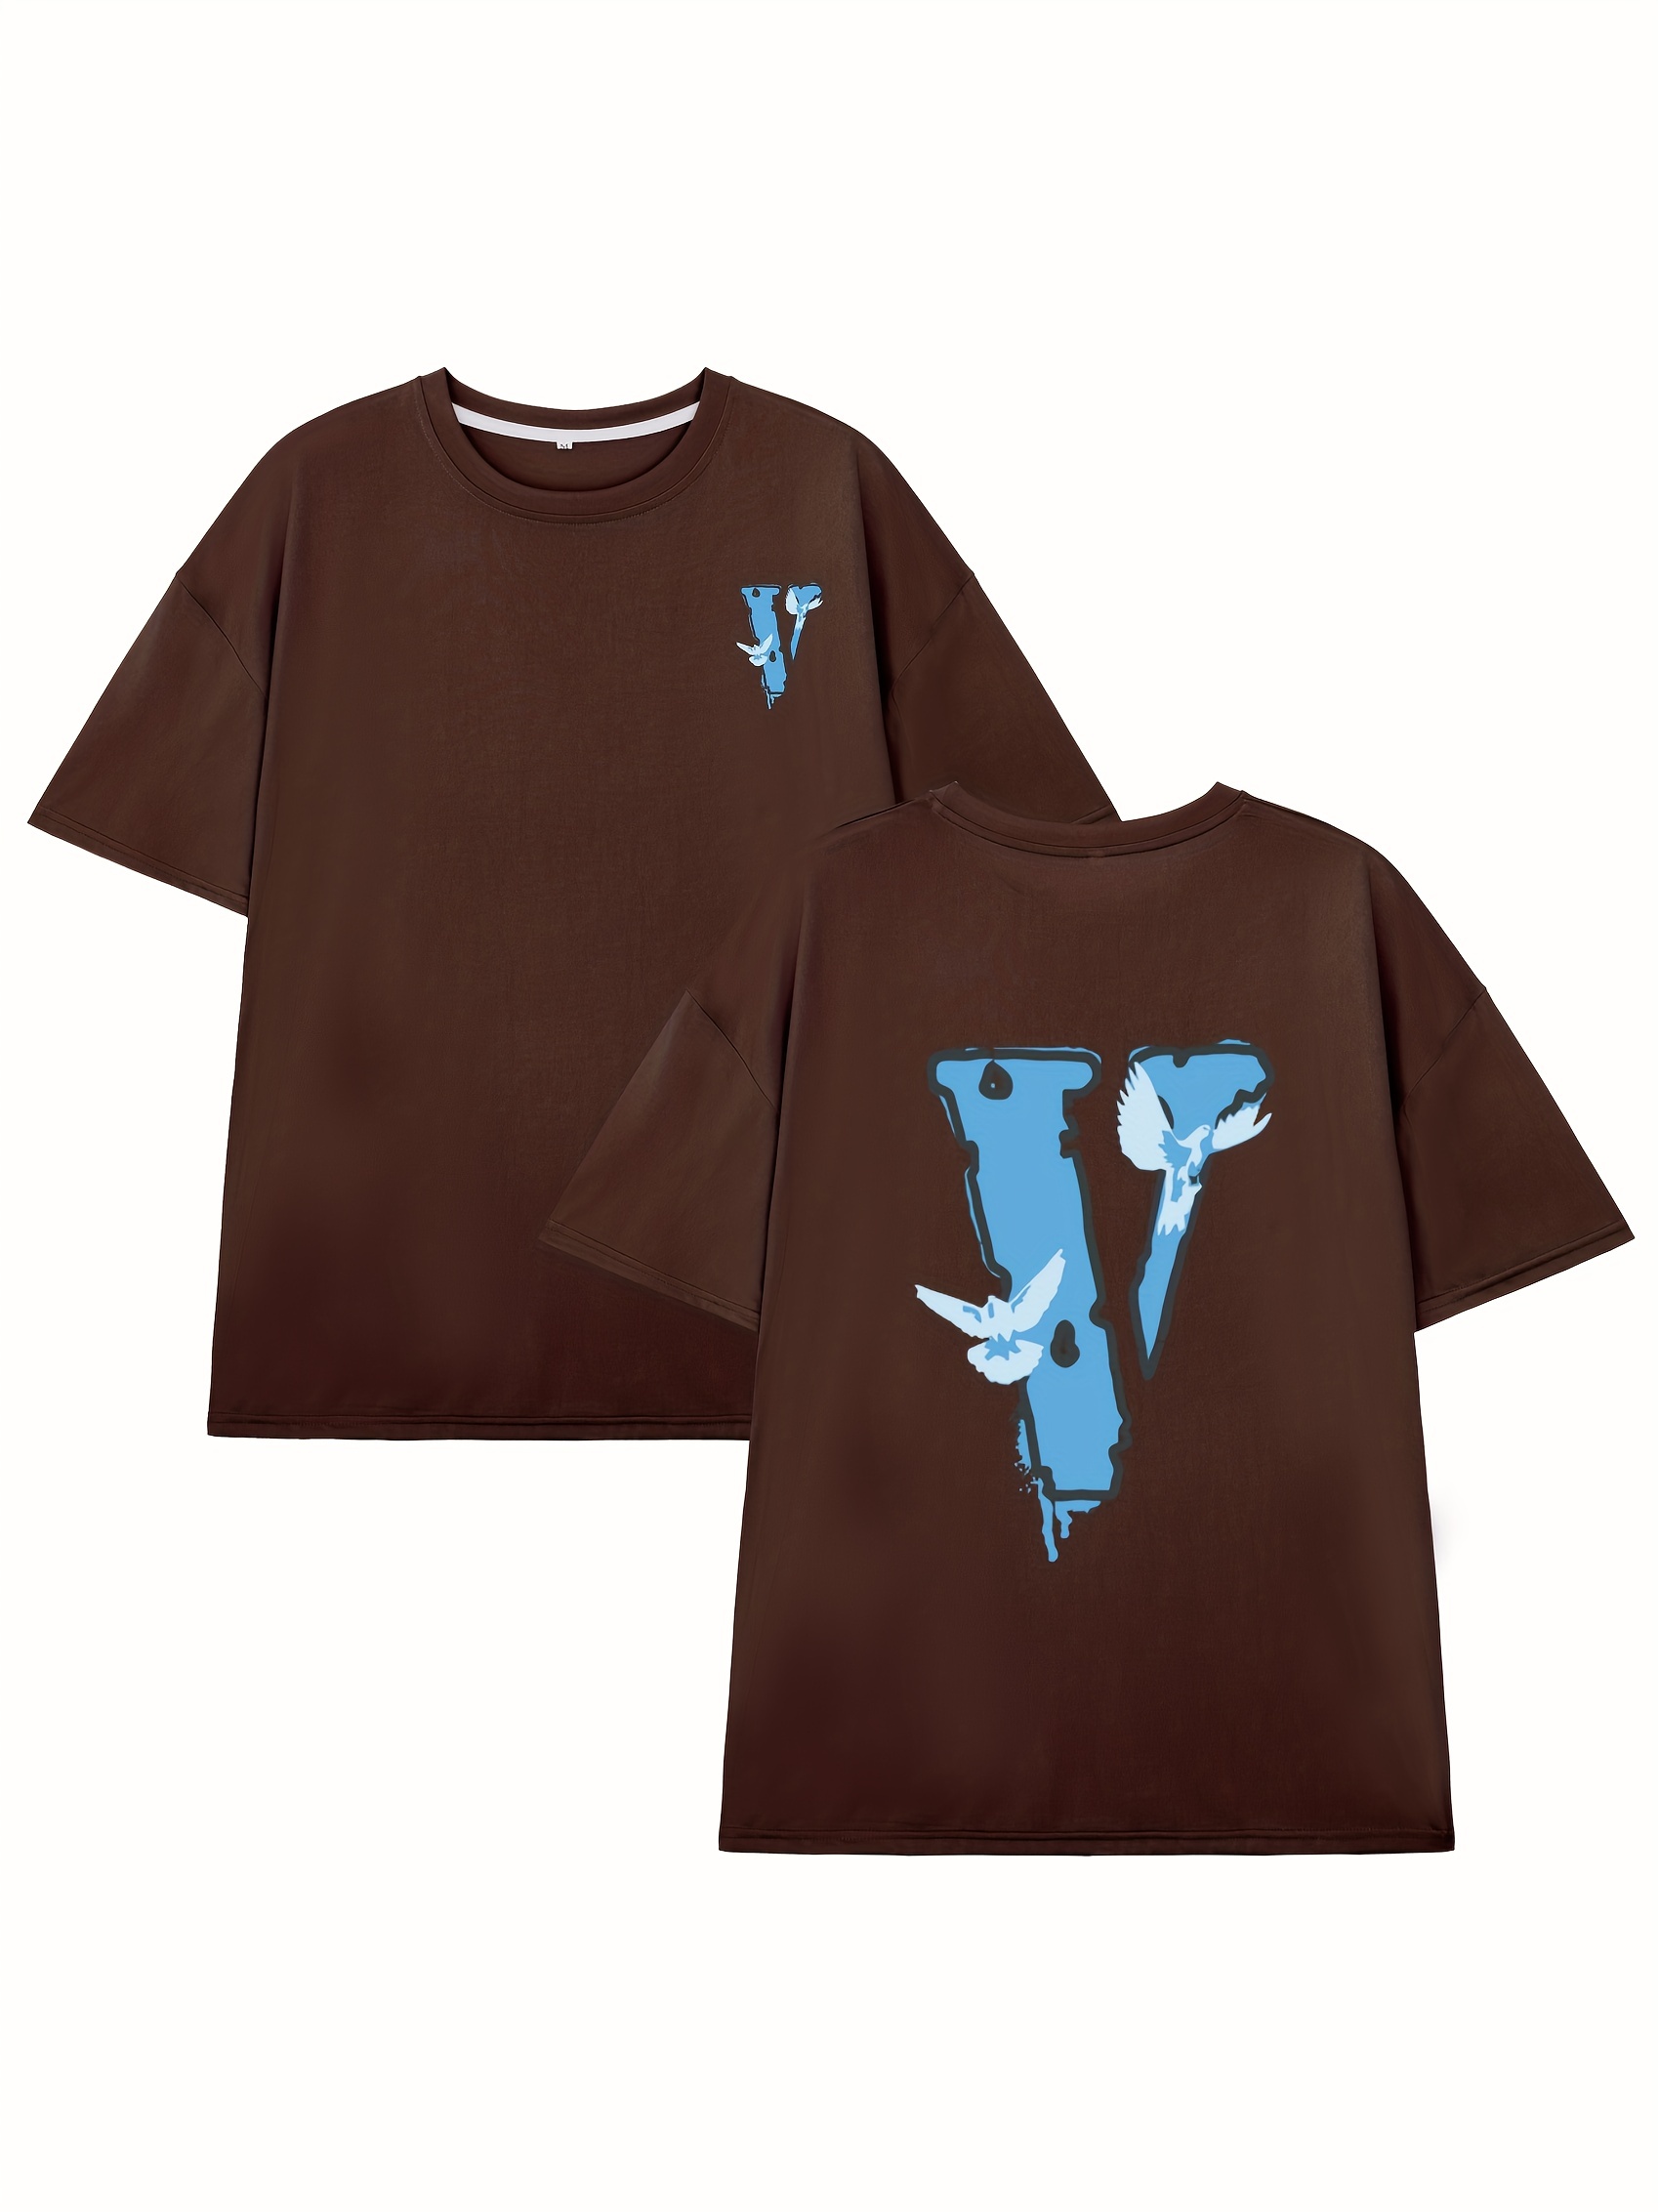 Louis Vuitton Camiseta Masculina De Gola Redonda Em Tamanho Grande